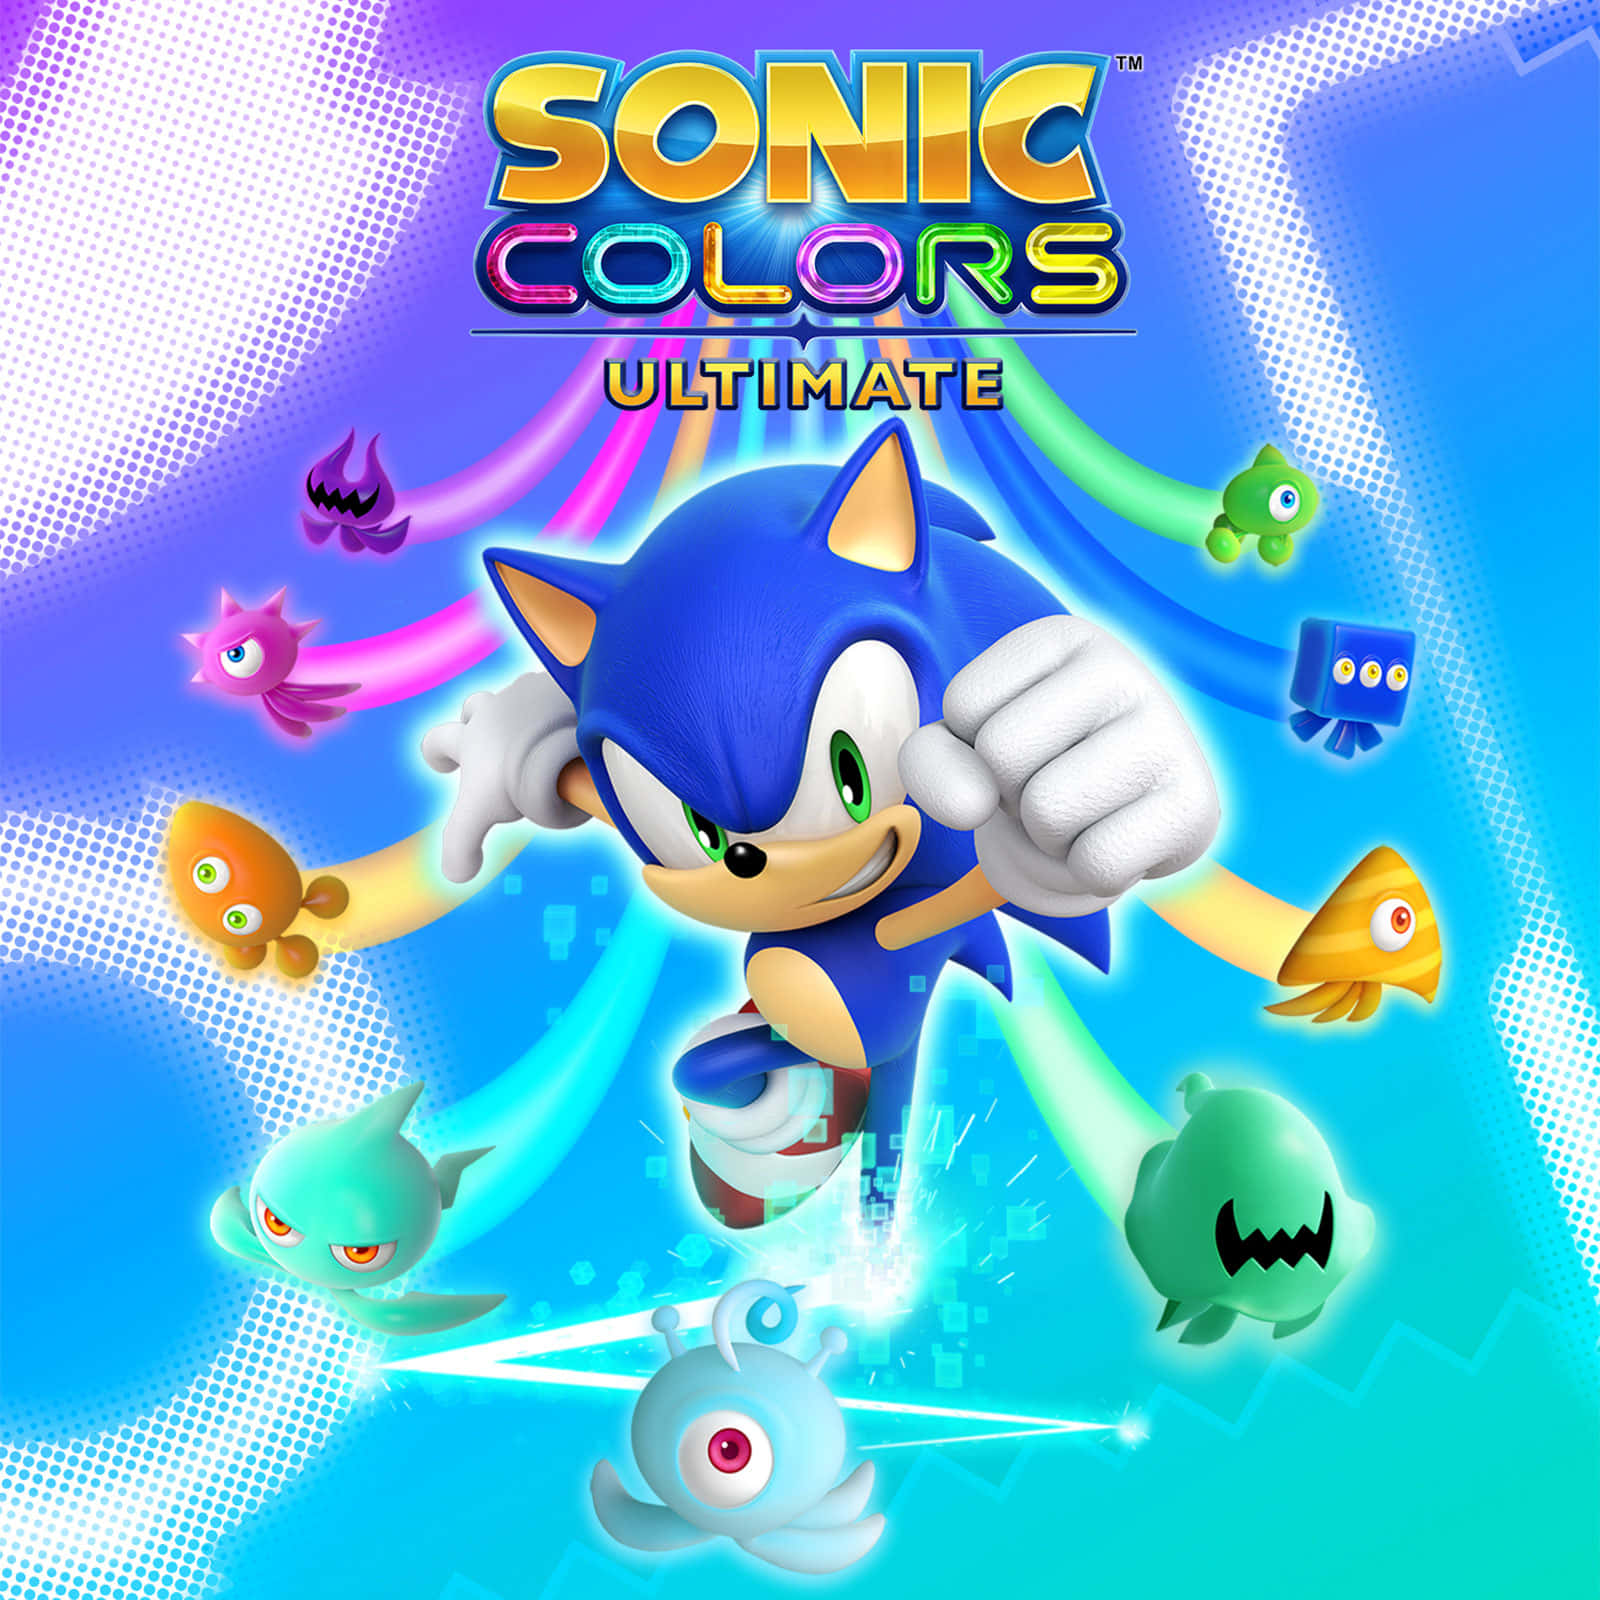 Soniccolors Ultimate 2 (colores Supremos De Sonic 2)